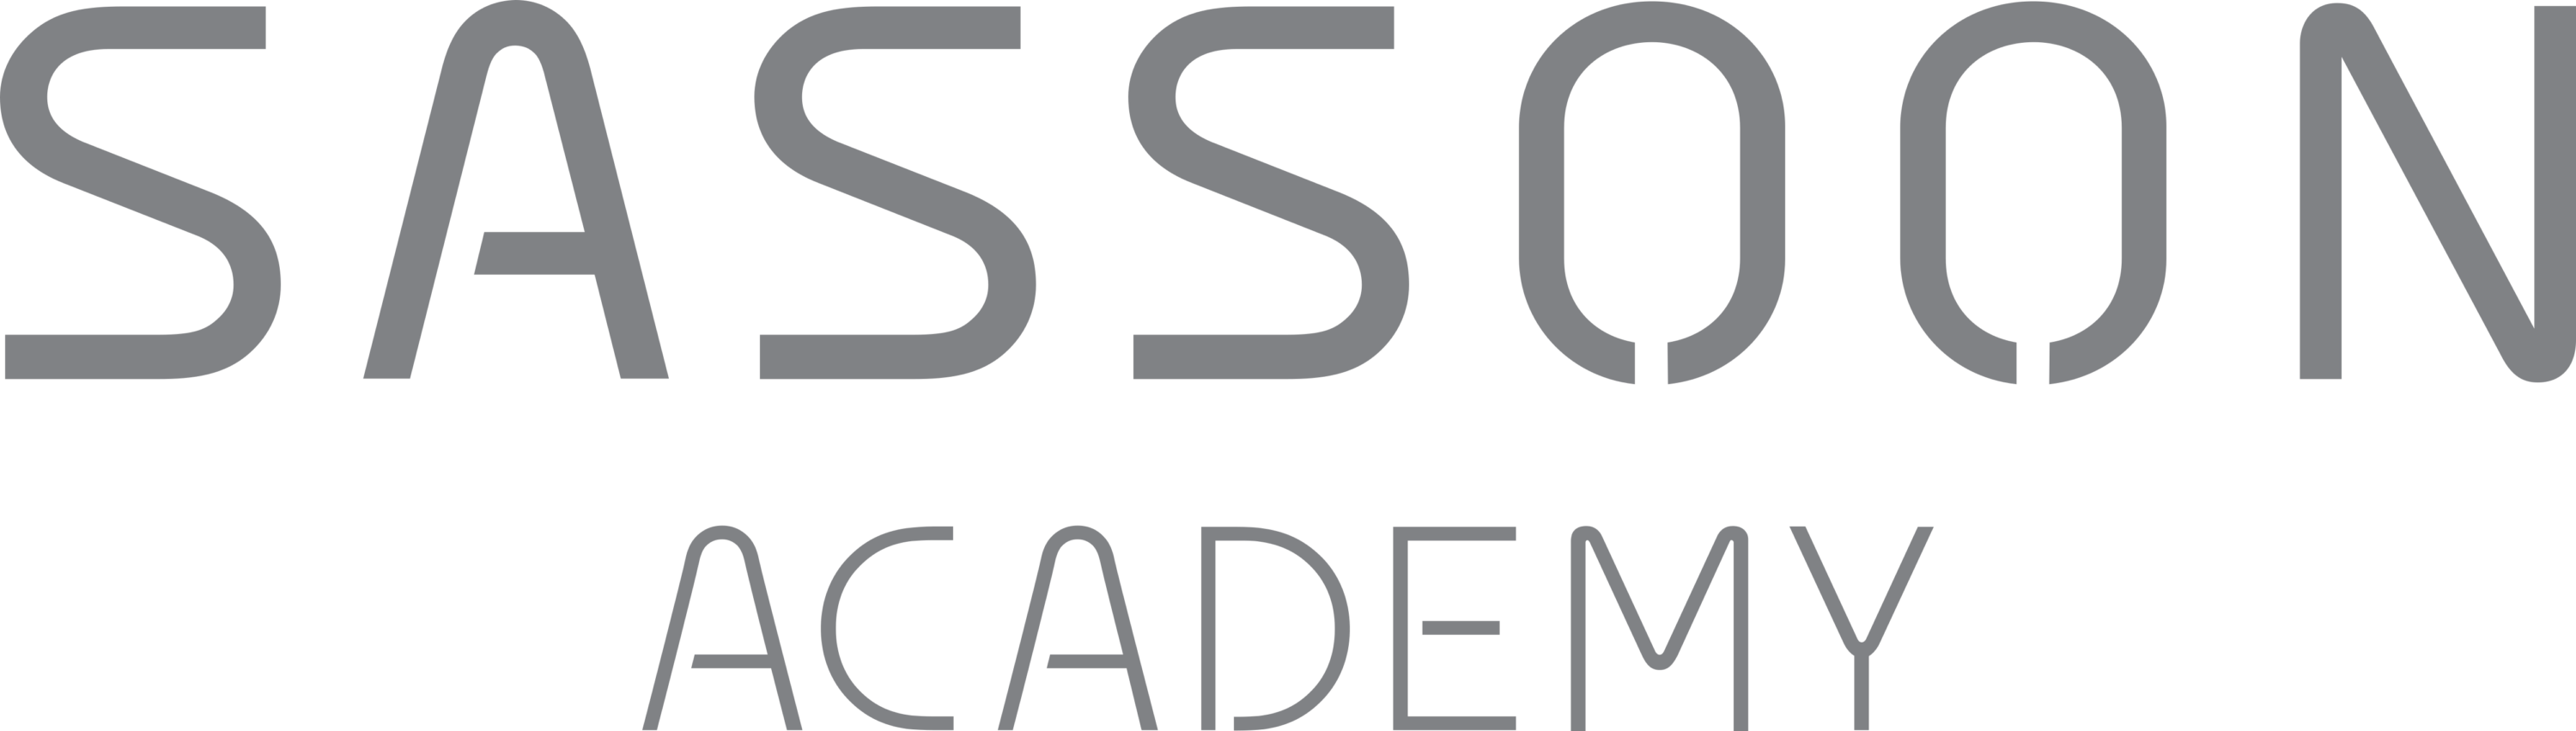 Sassoon Academy Logo